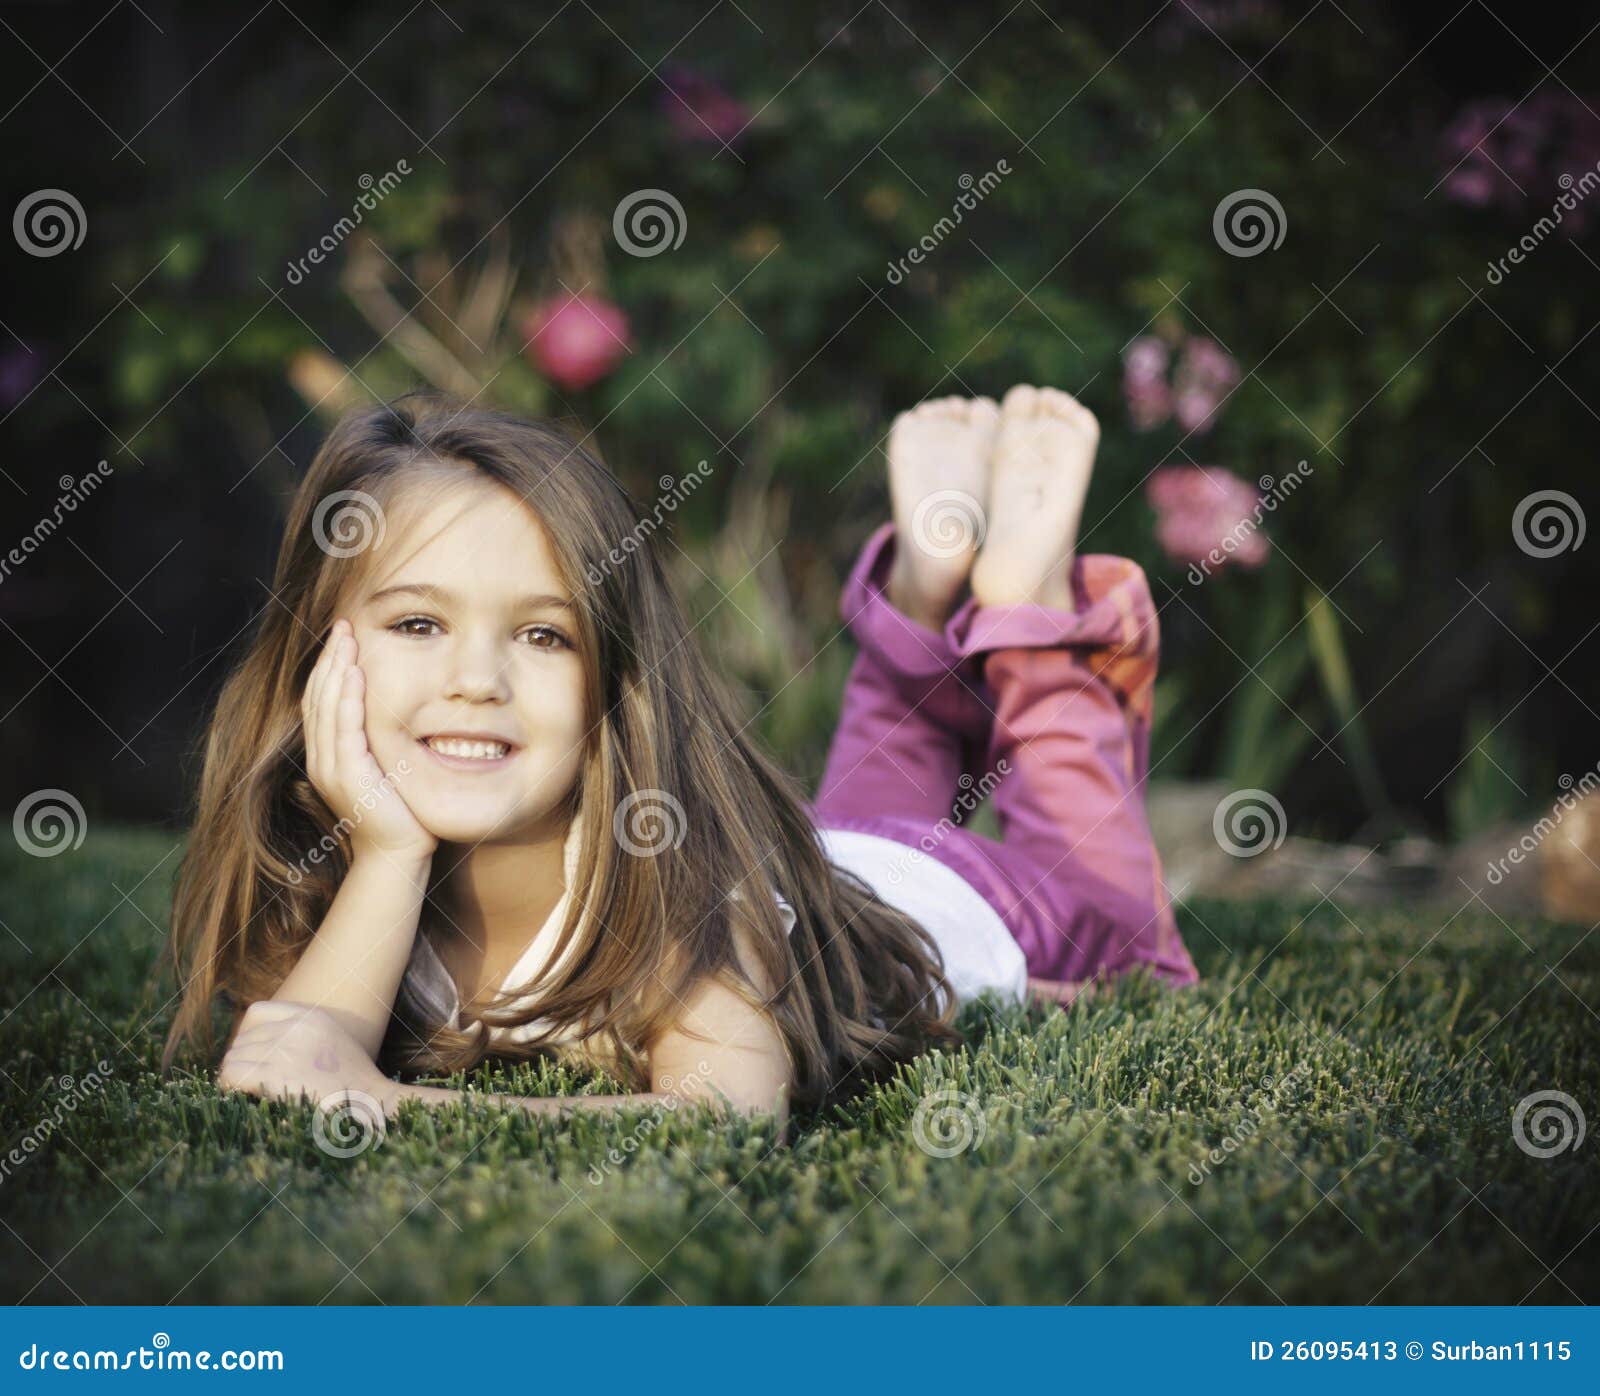 All American Girl Stock Image Image Of American Purity 26095413